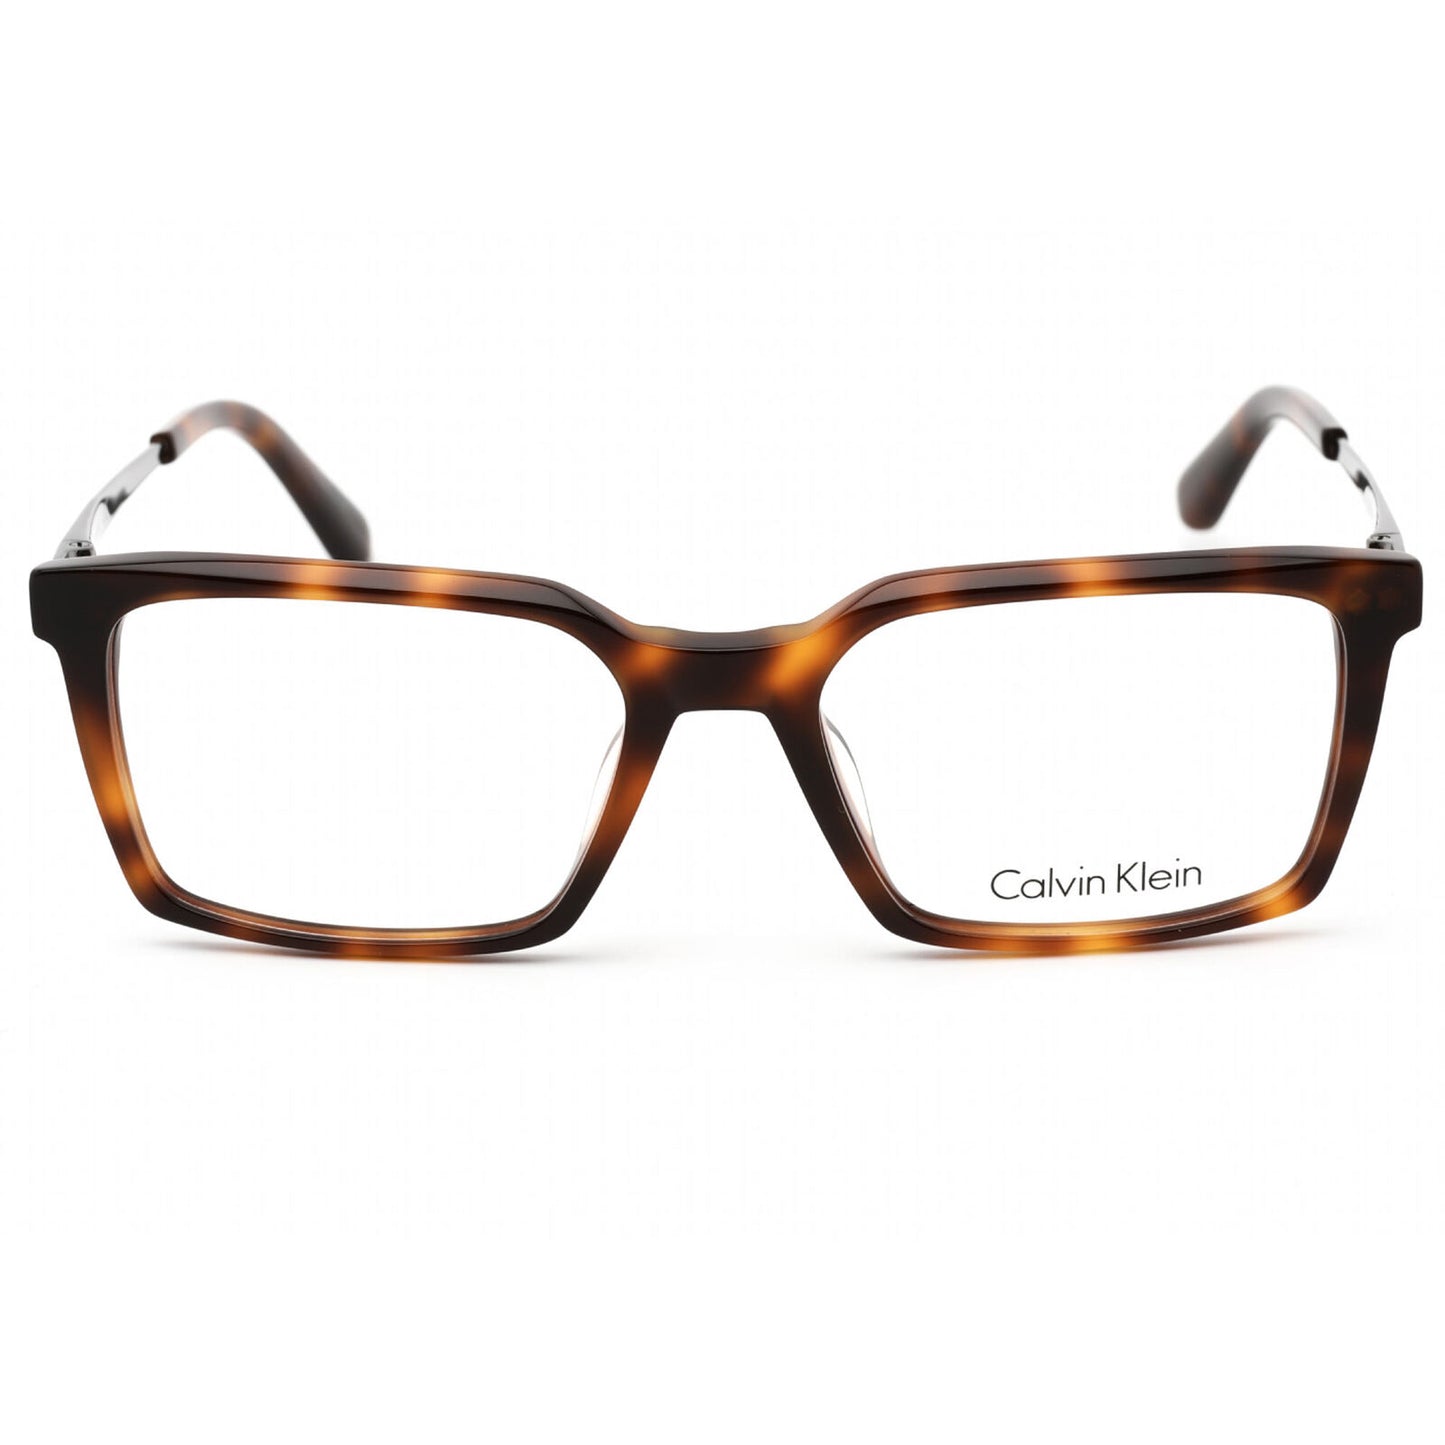 Calvin Klein CK22510-220-5418 54mm New Eyeglasses